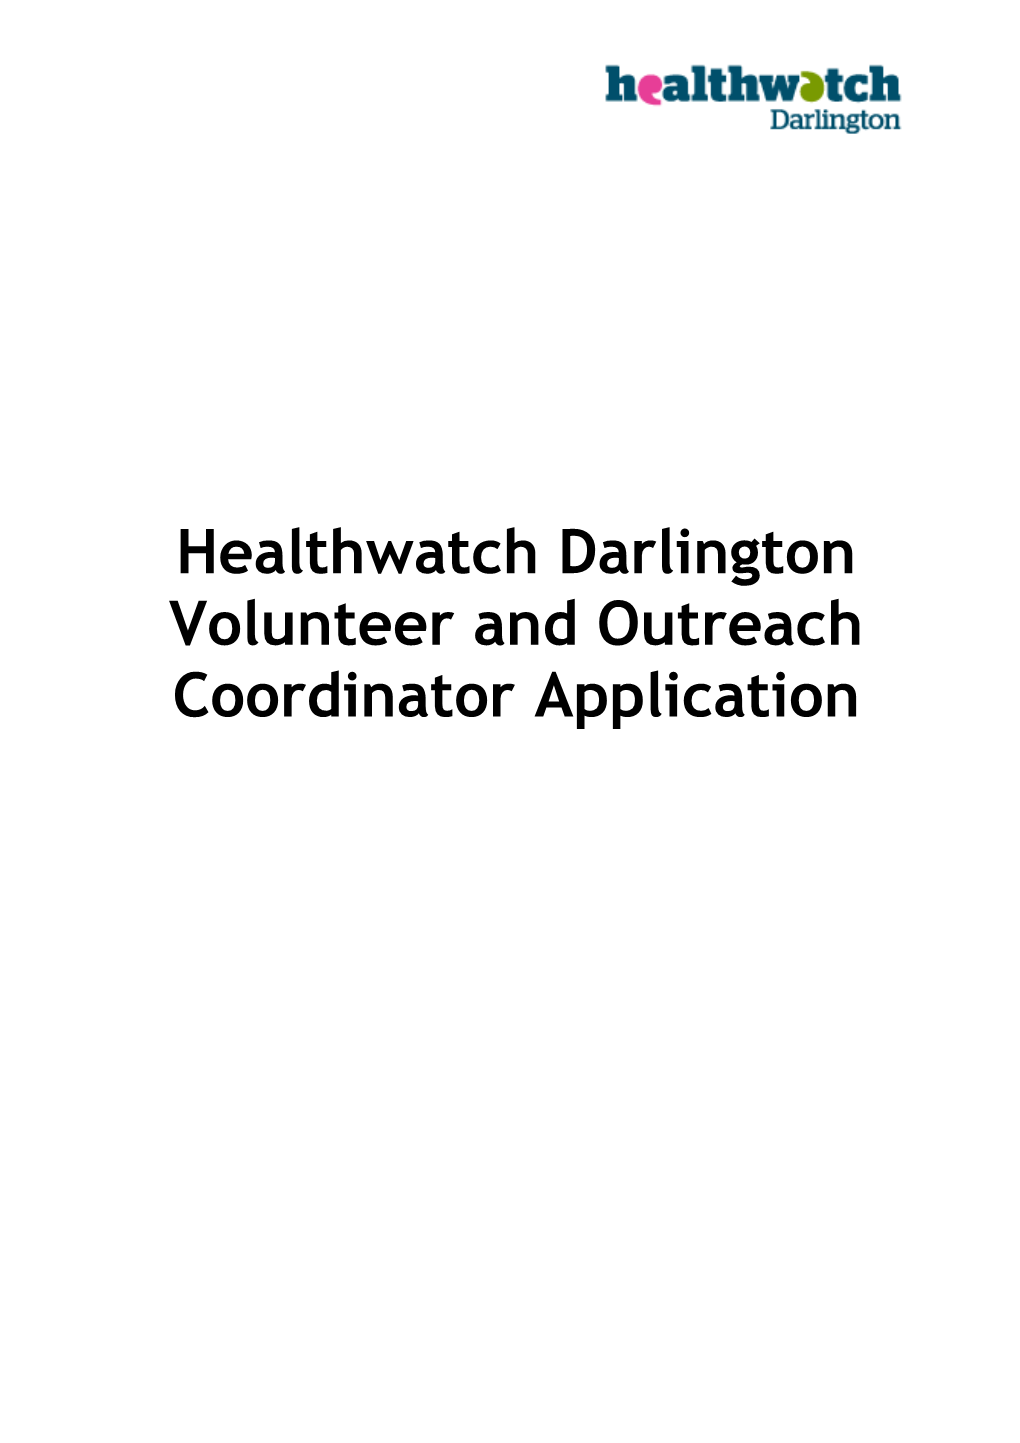 Healthwatch Darlington Volunteer and Outreach Coordinator Application